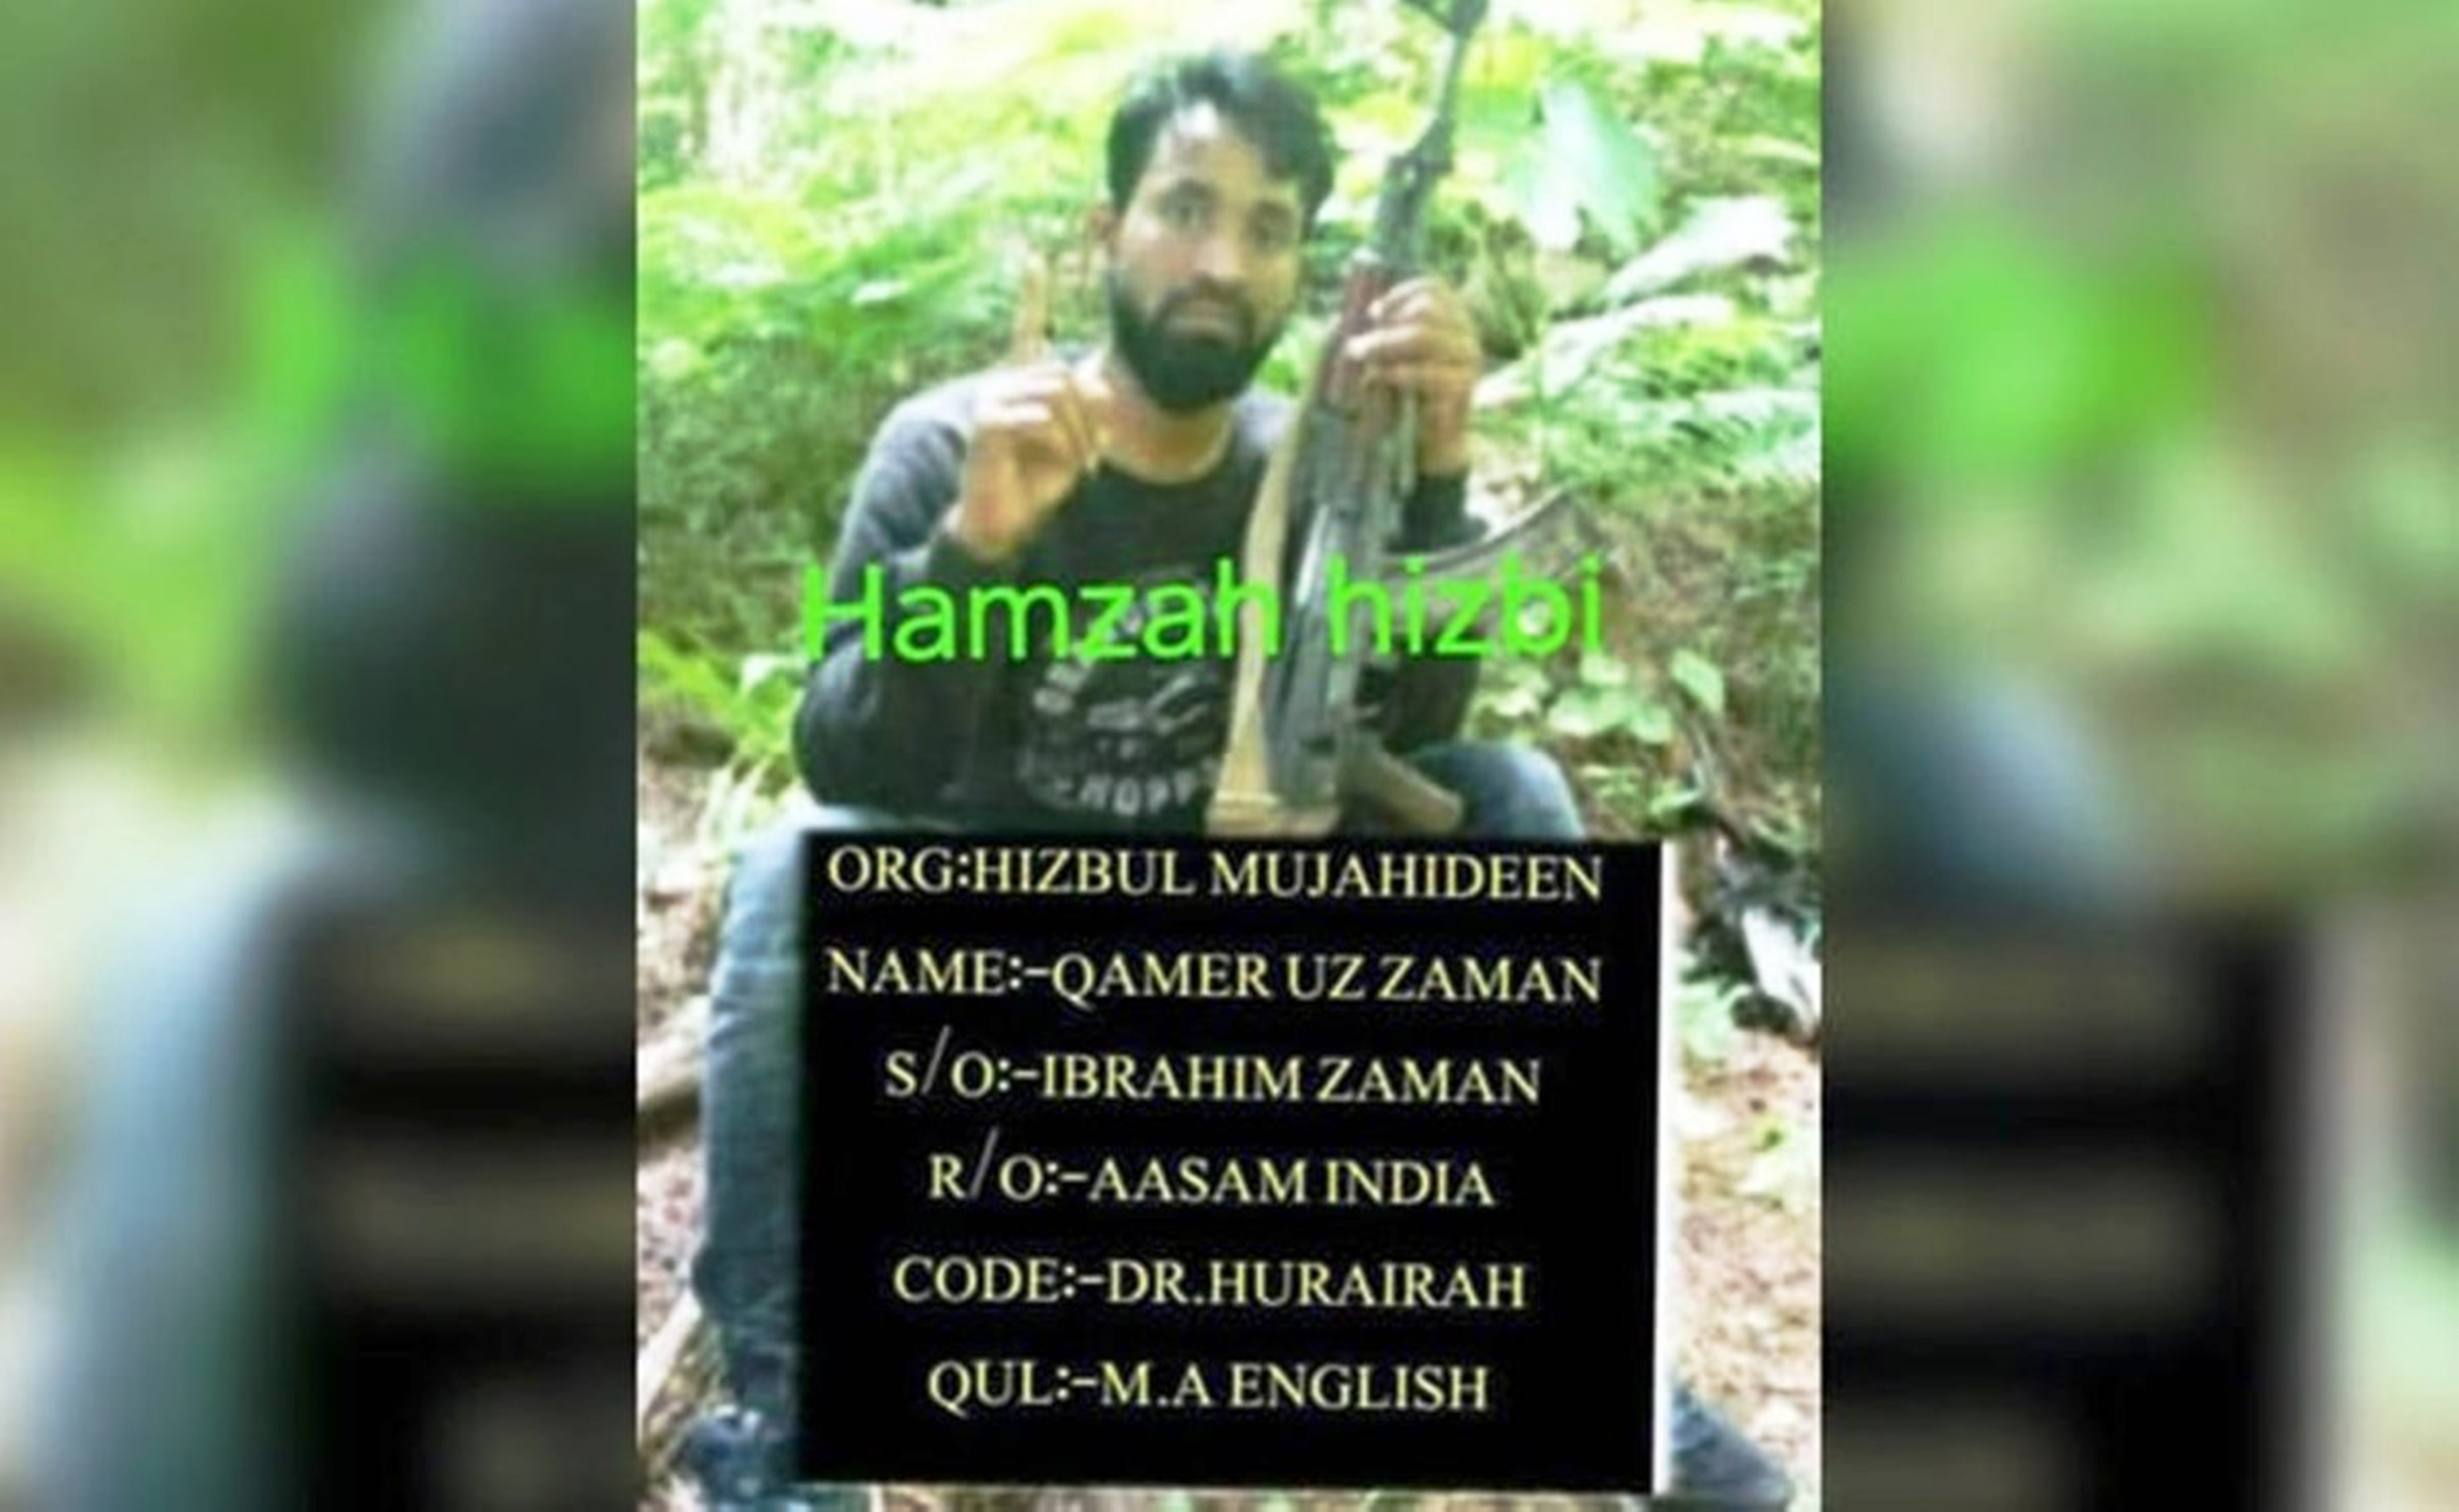 three businessmen of kashmir were helping terrorist kamruzzaman